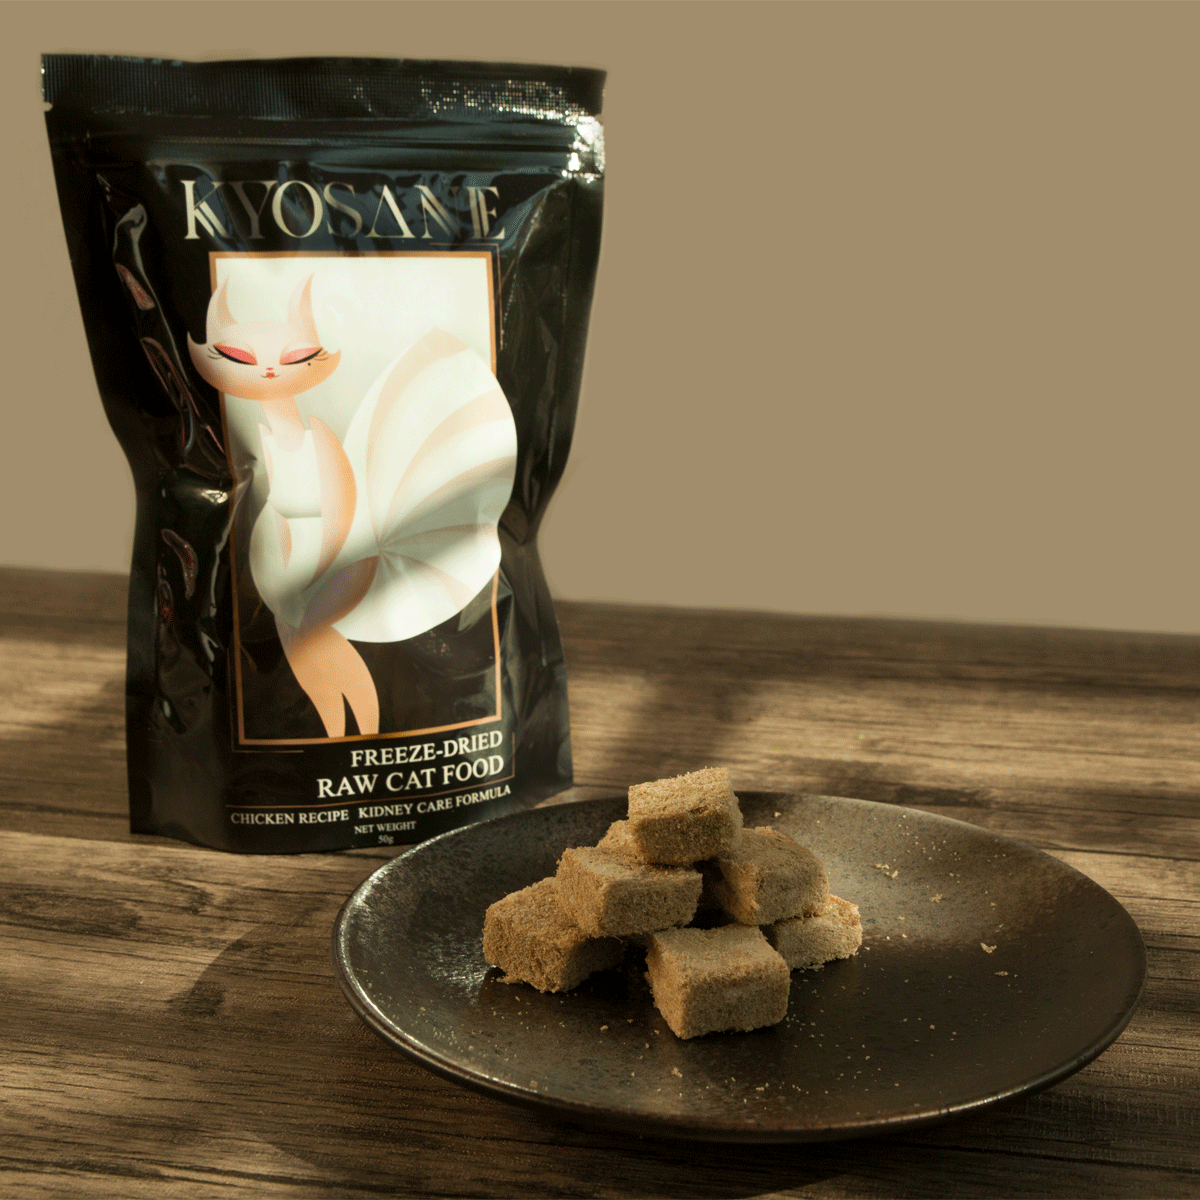 Kyosane Freeze-Dried Raw Cat Food Chicken Recipe Kidney Care Formula (100 packs) 35% Off (ลดล้างสต๊อก)